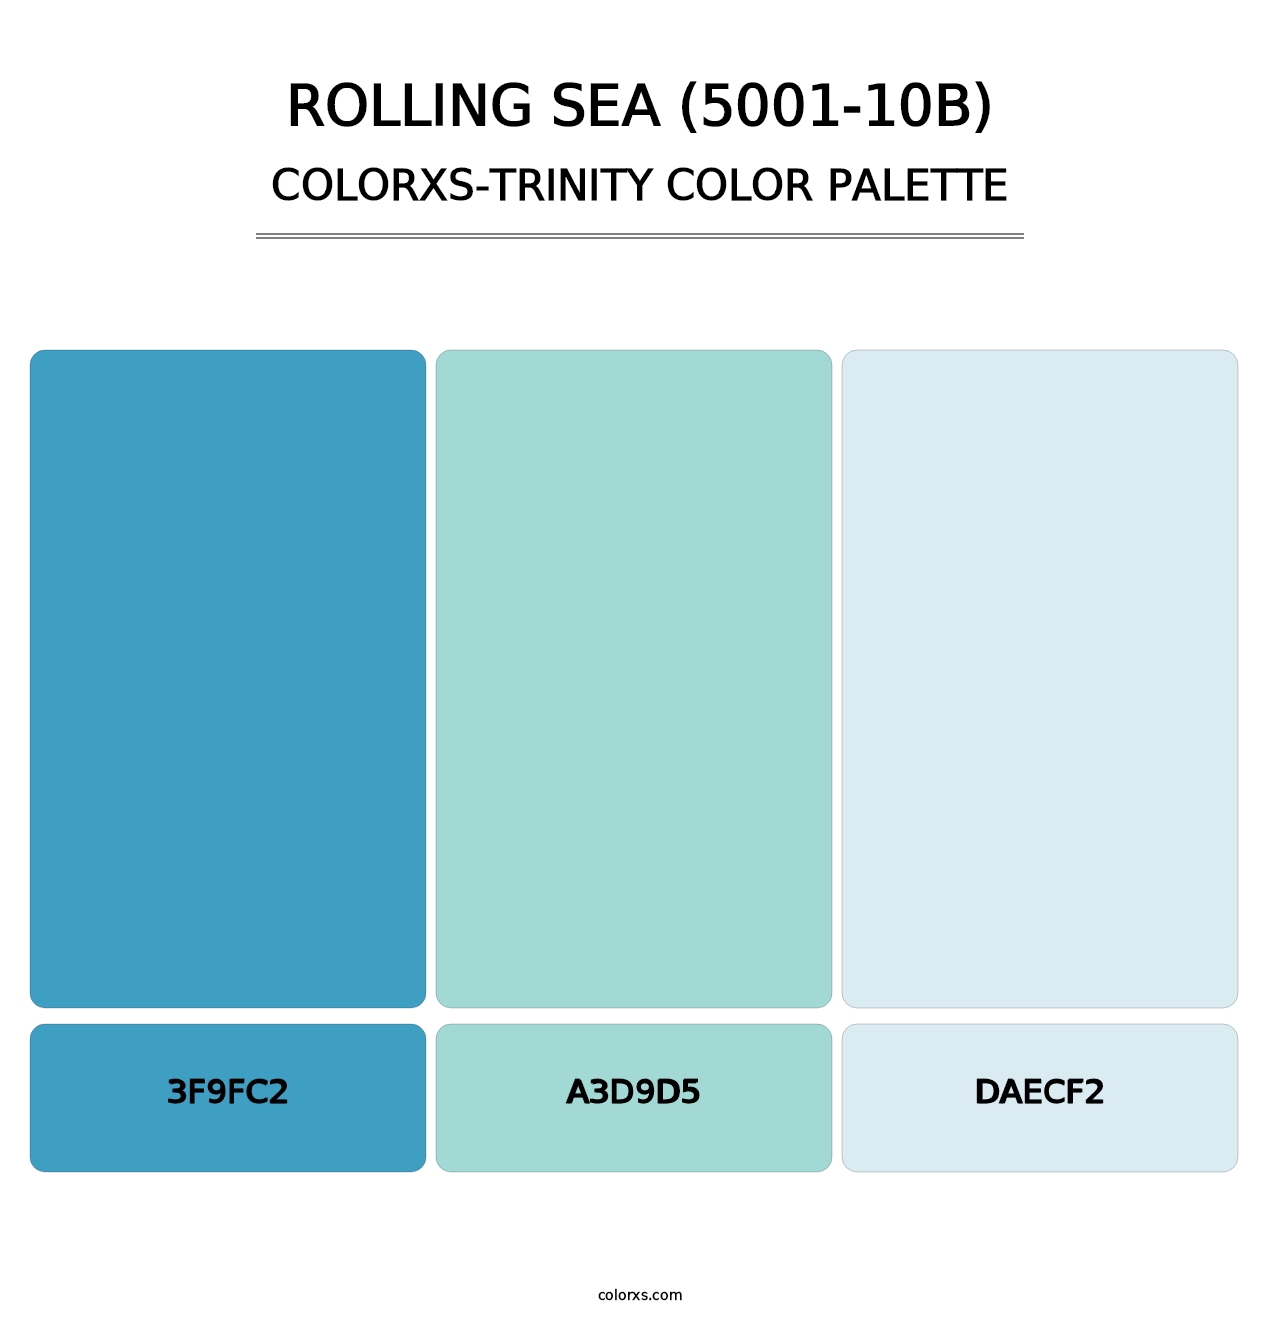 Rolling Sea (5001-10B) - Colorxs Trinity Palette